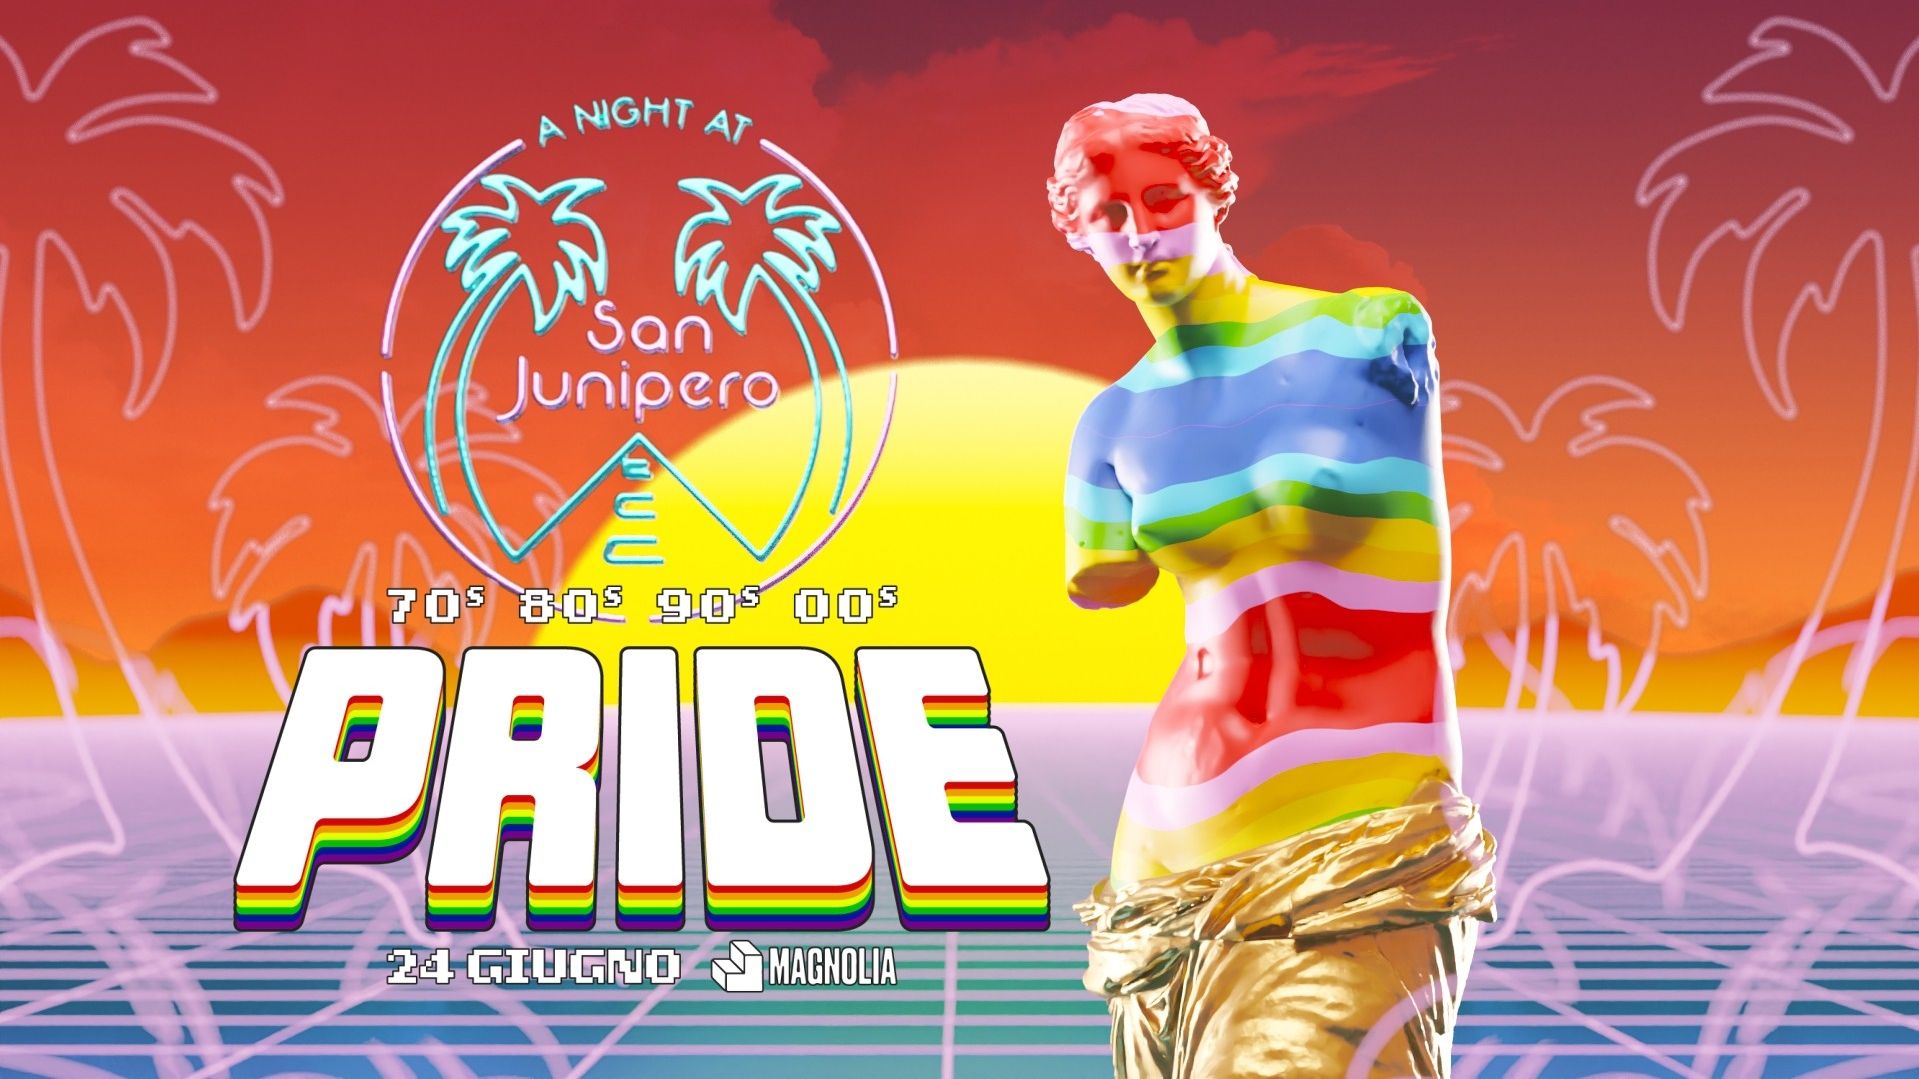 A Night At San Junipero- Pride!